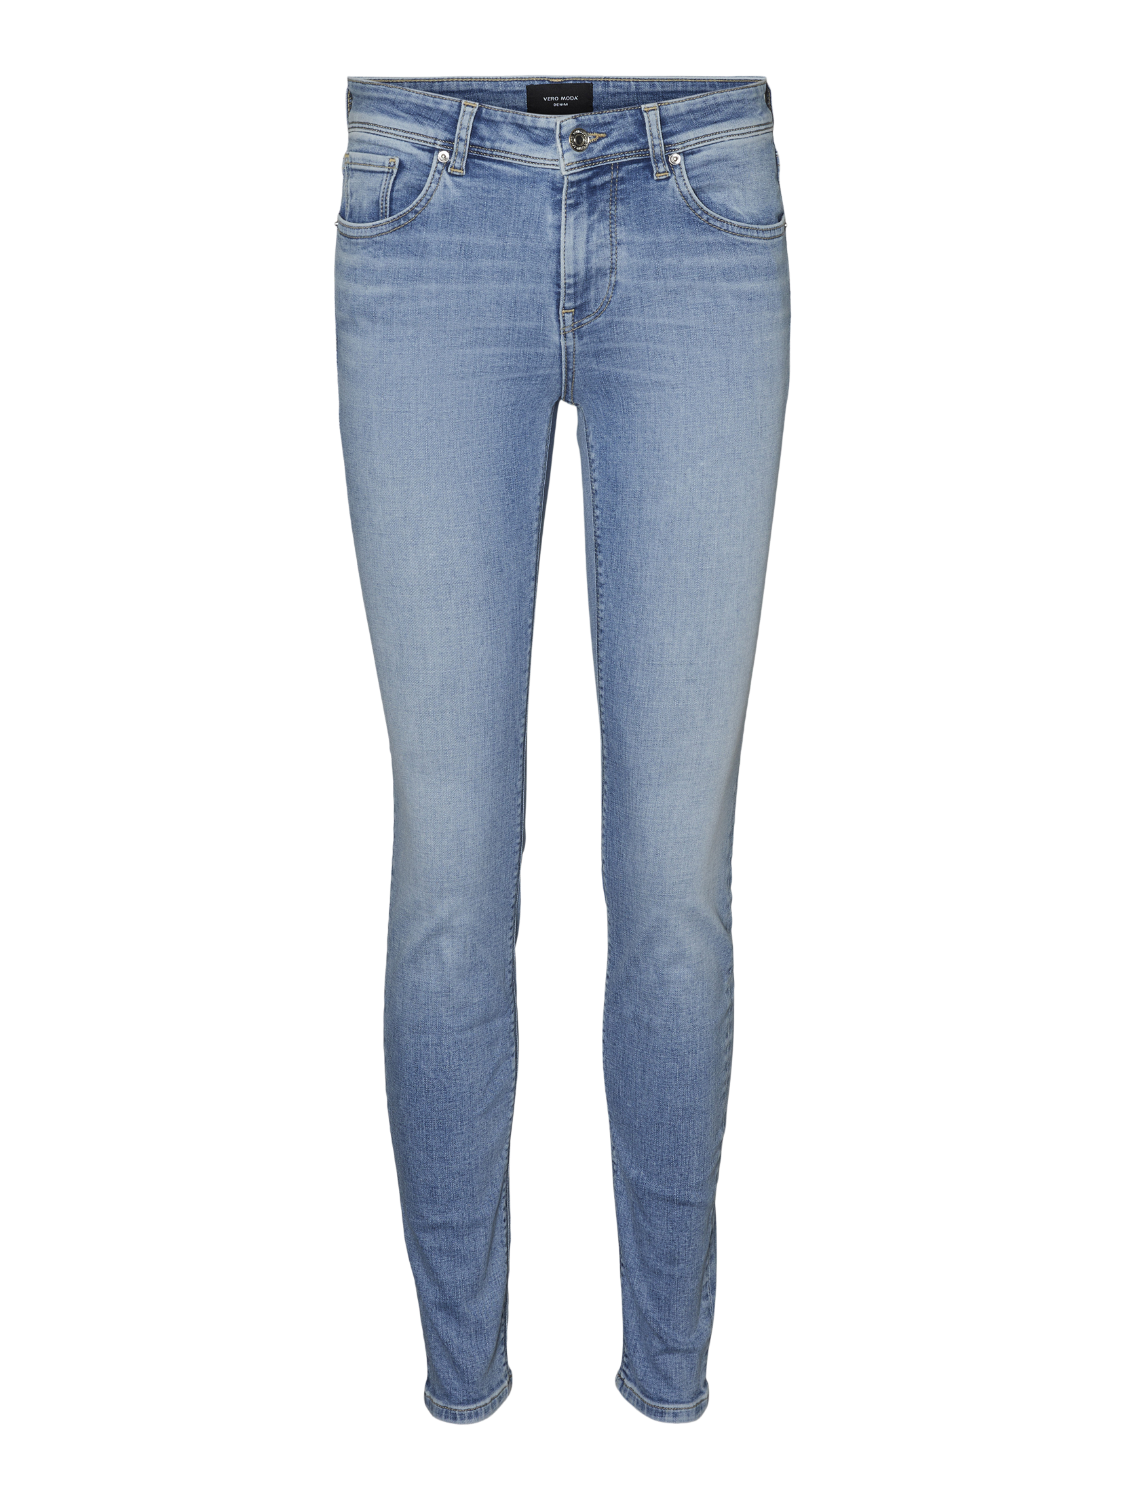 VMLUX Jeans - Light Blue Denim